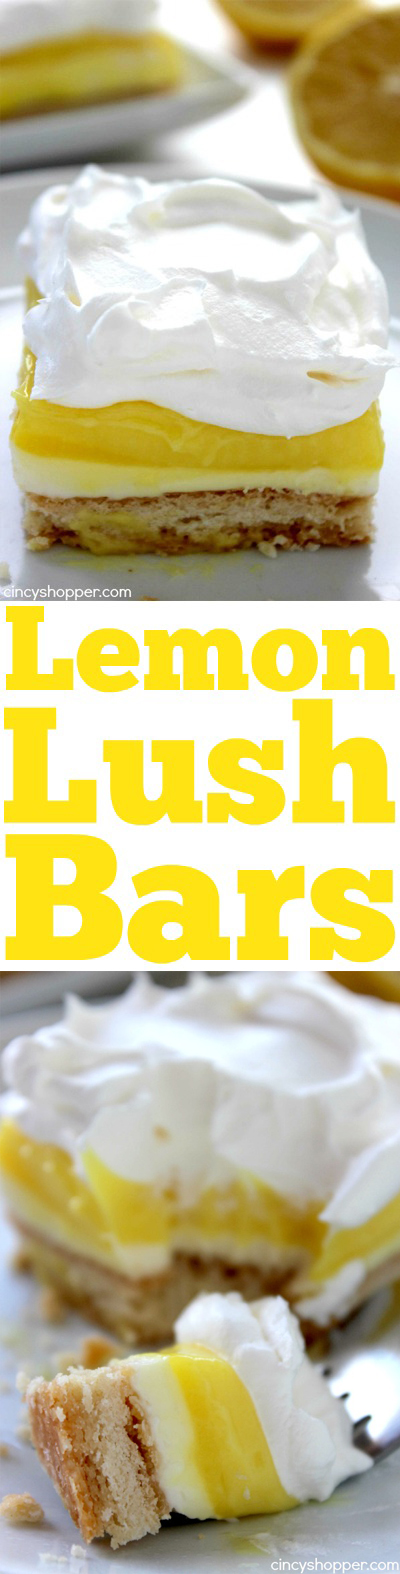 Lemon Lush Bars- Delicious Layered dessert. Super simple and tastes AMAZING! Great summer dessert.